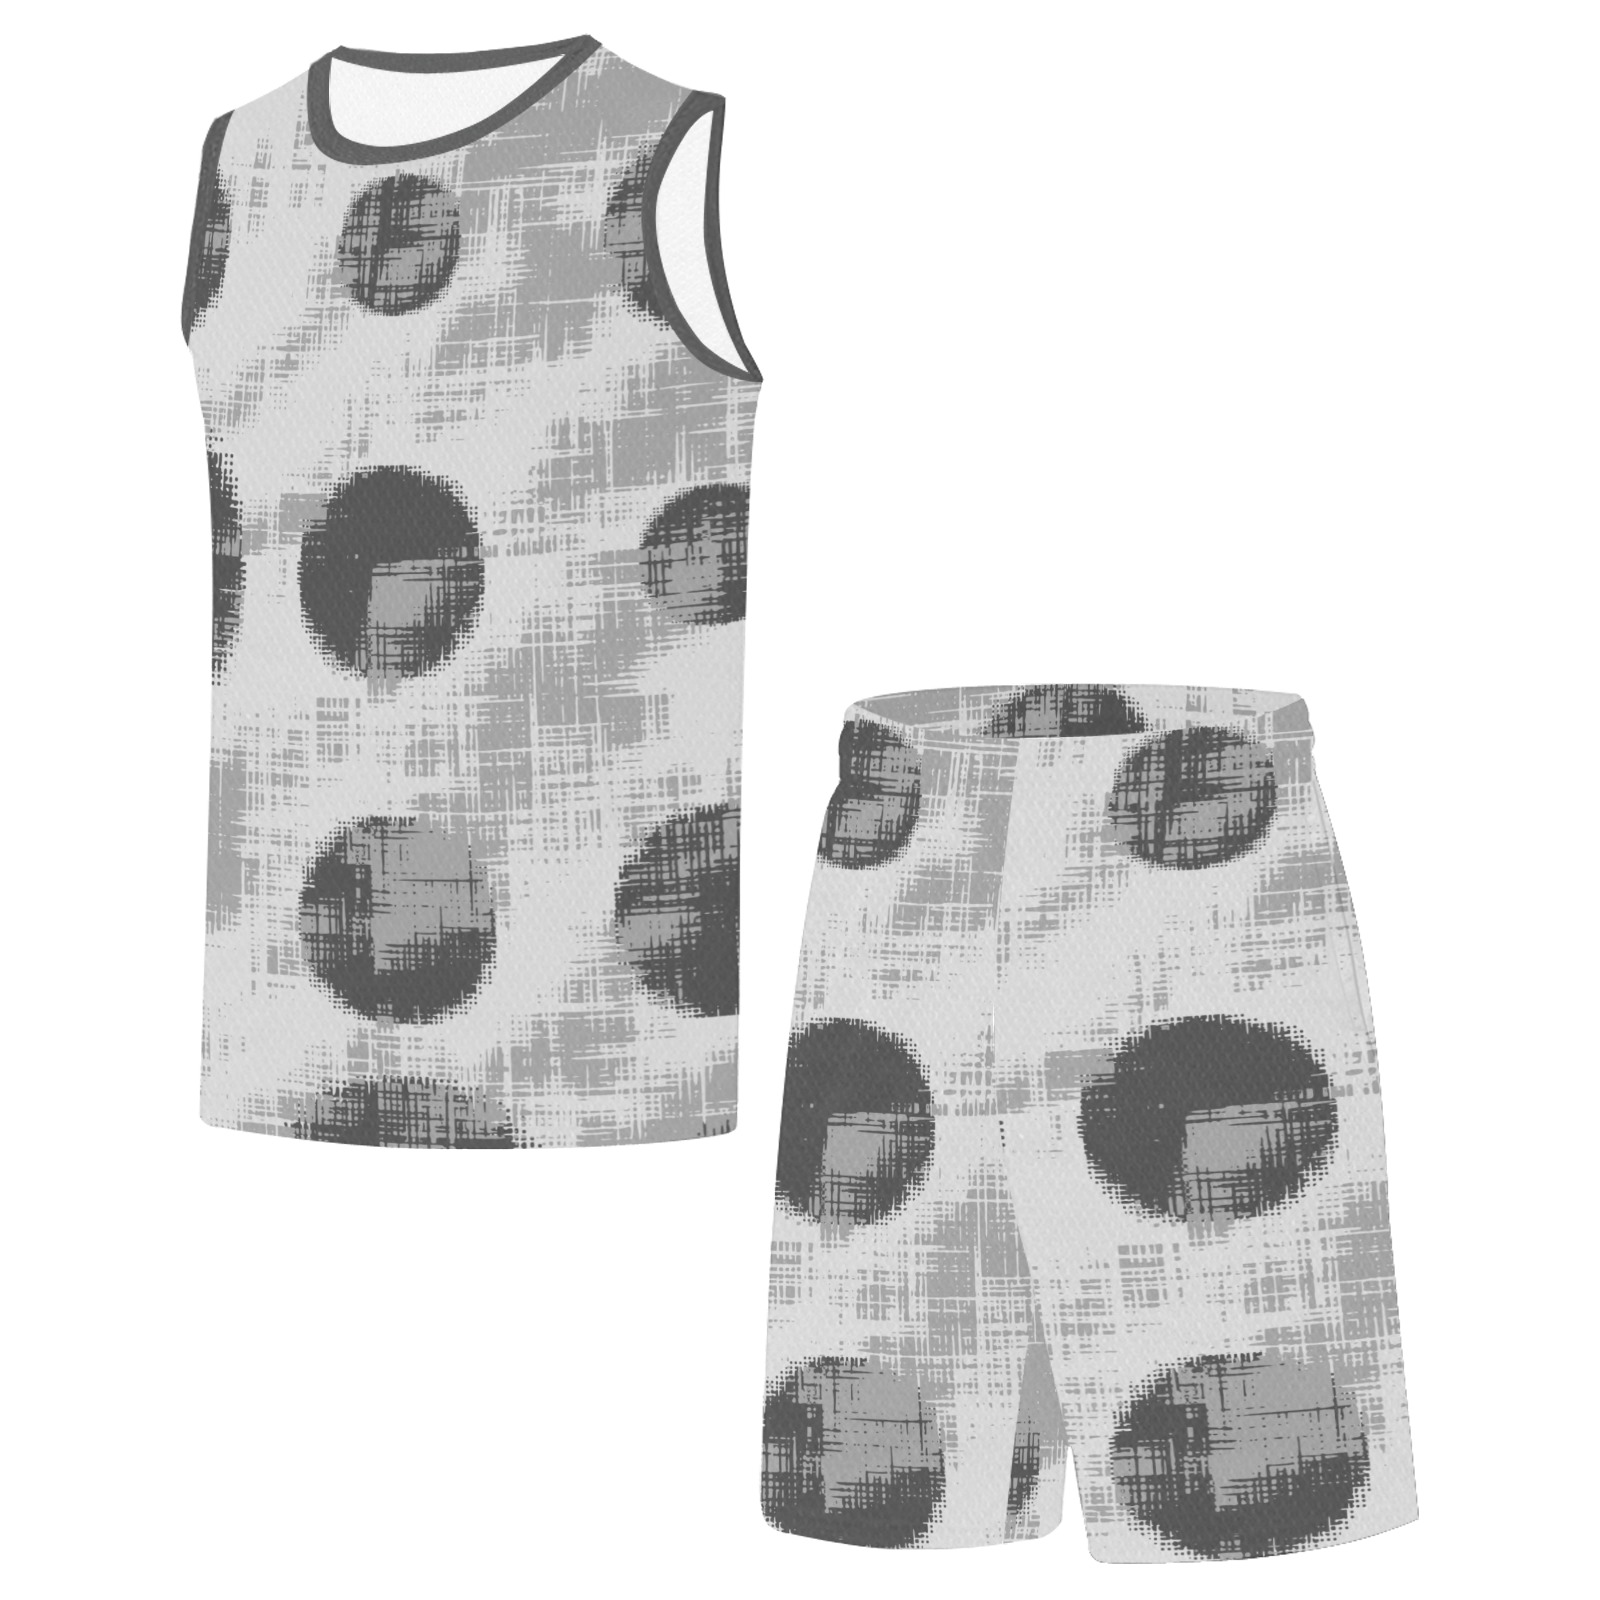 Vintage Grunge Circles - Gray Basketball Uniform with Pocket